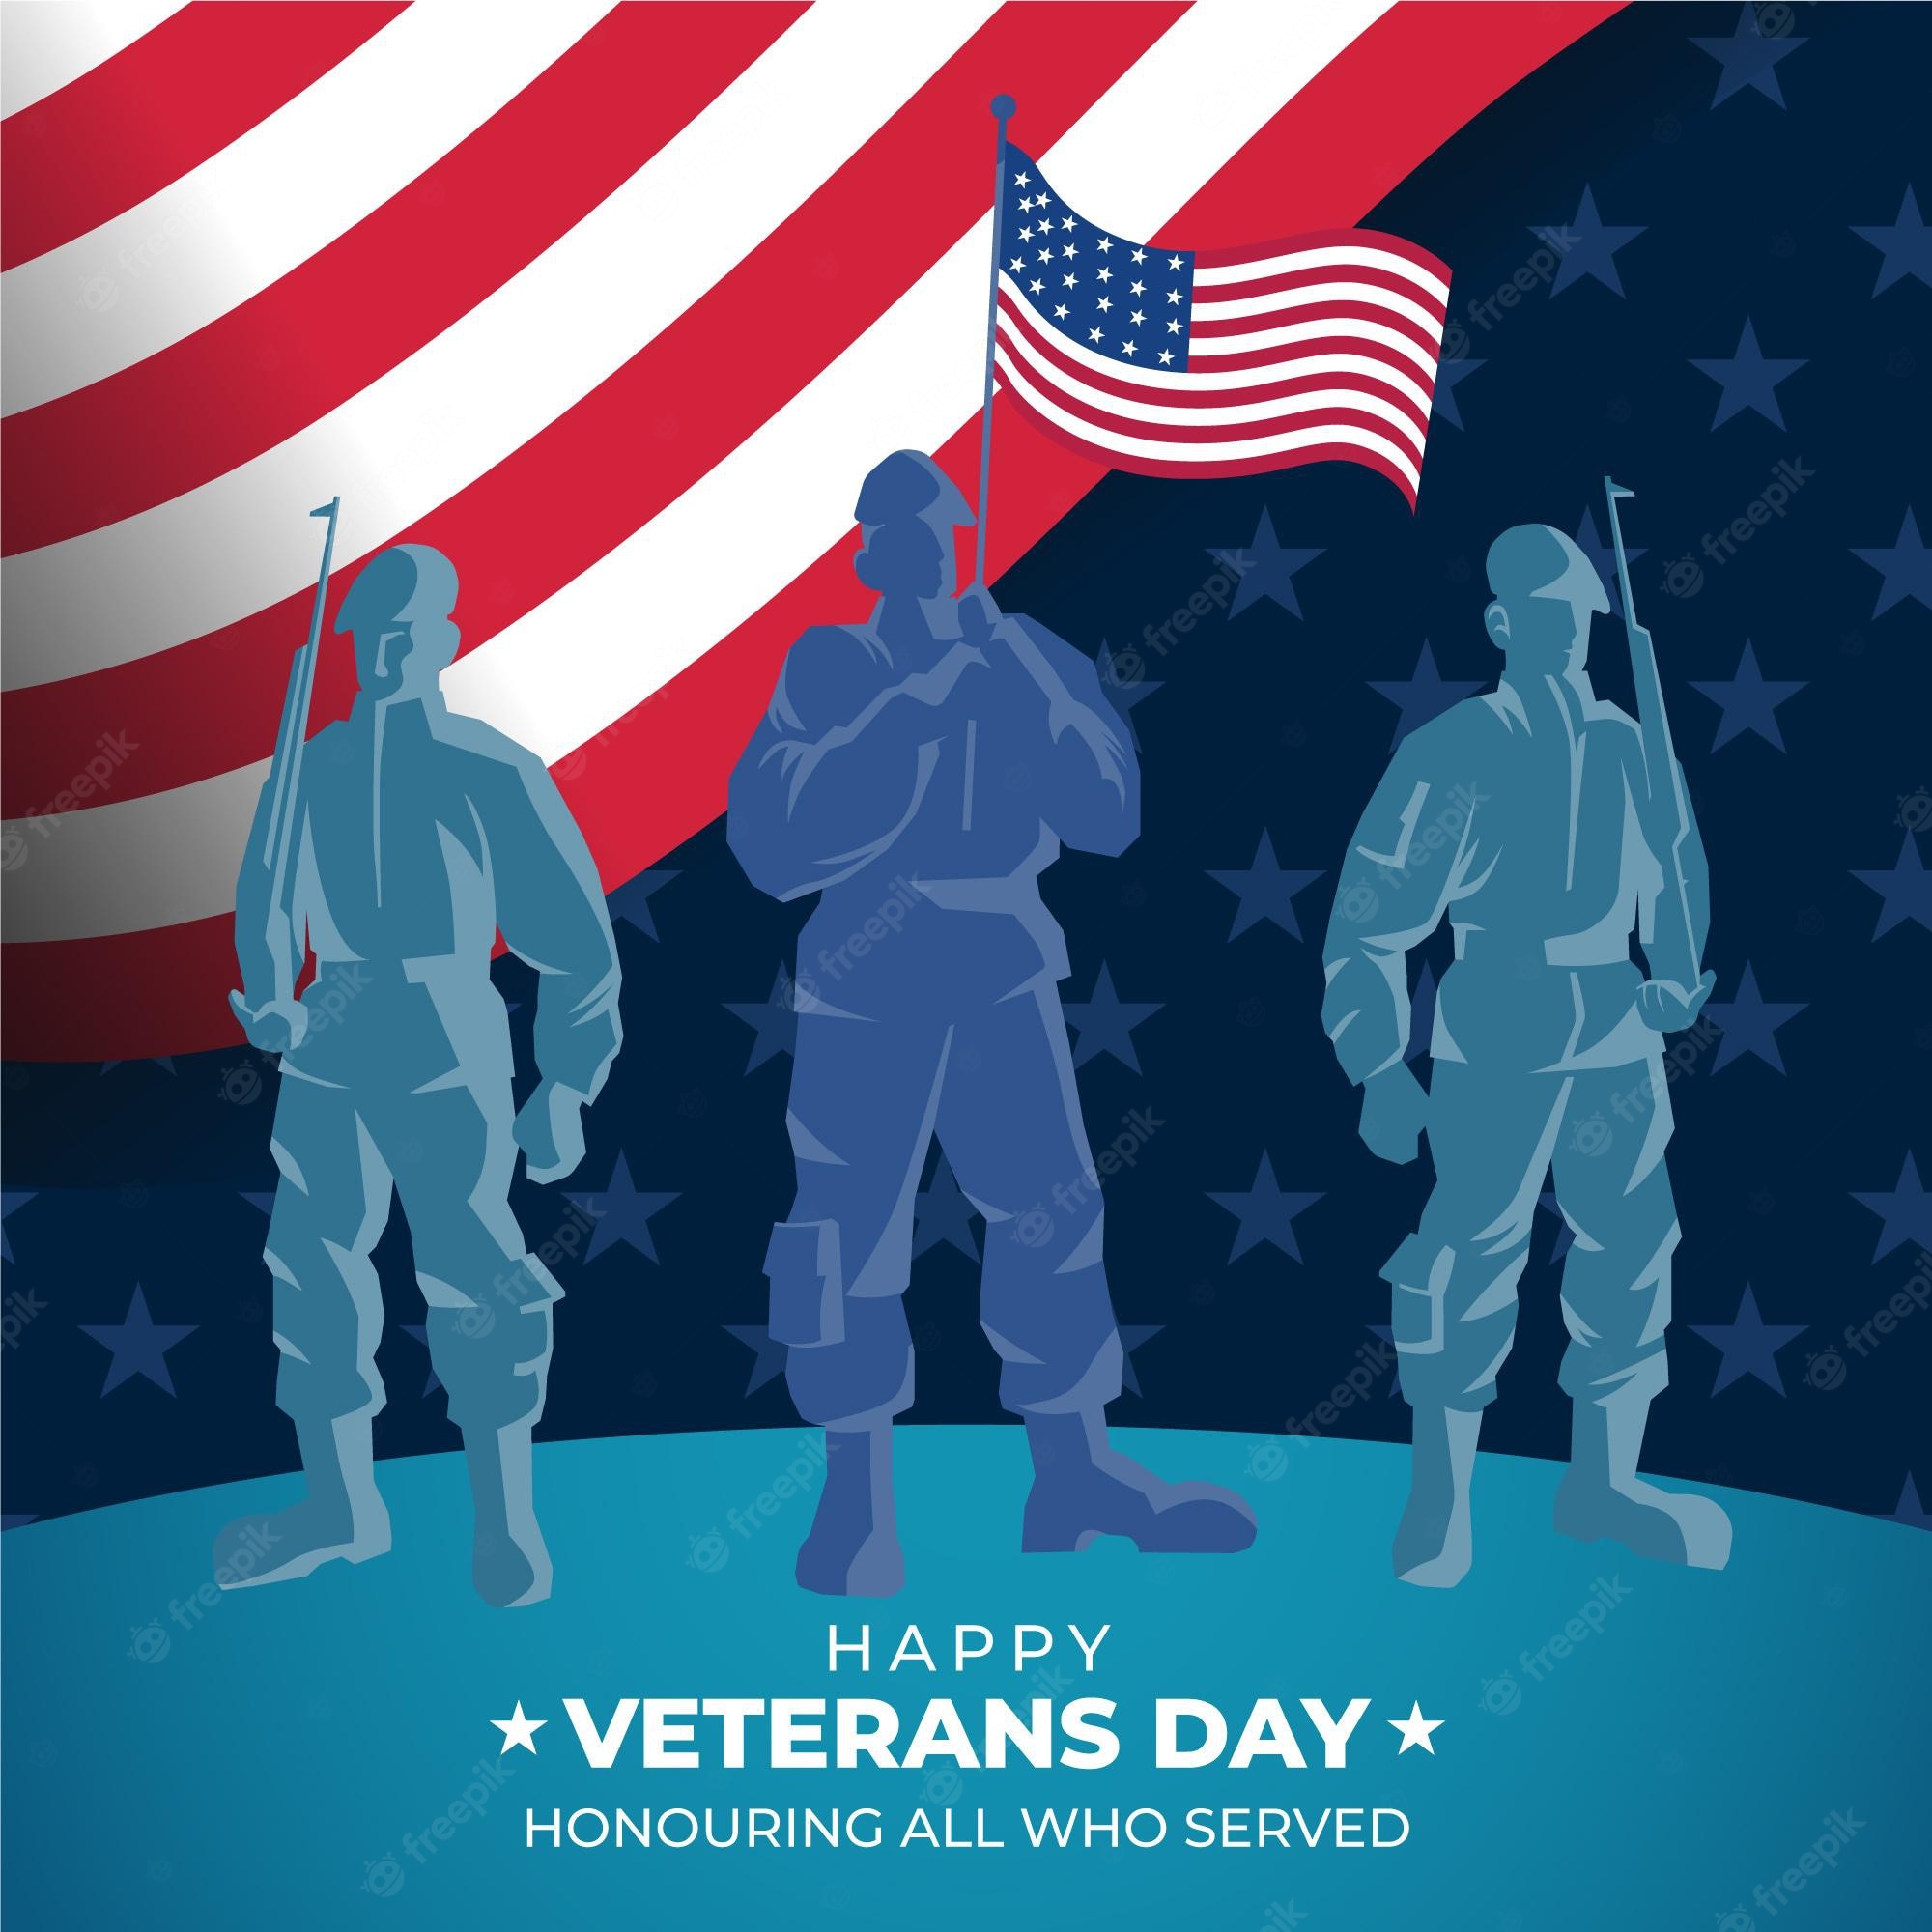 Veterans day Image. Free Vectors, & PSD